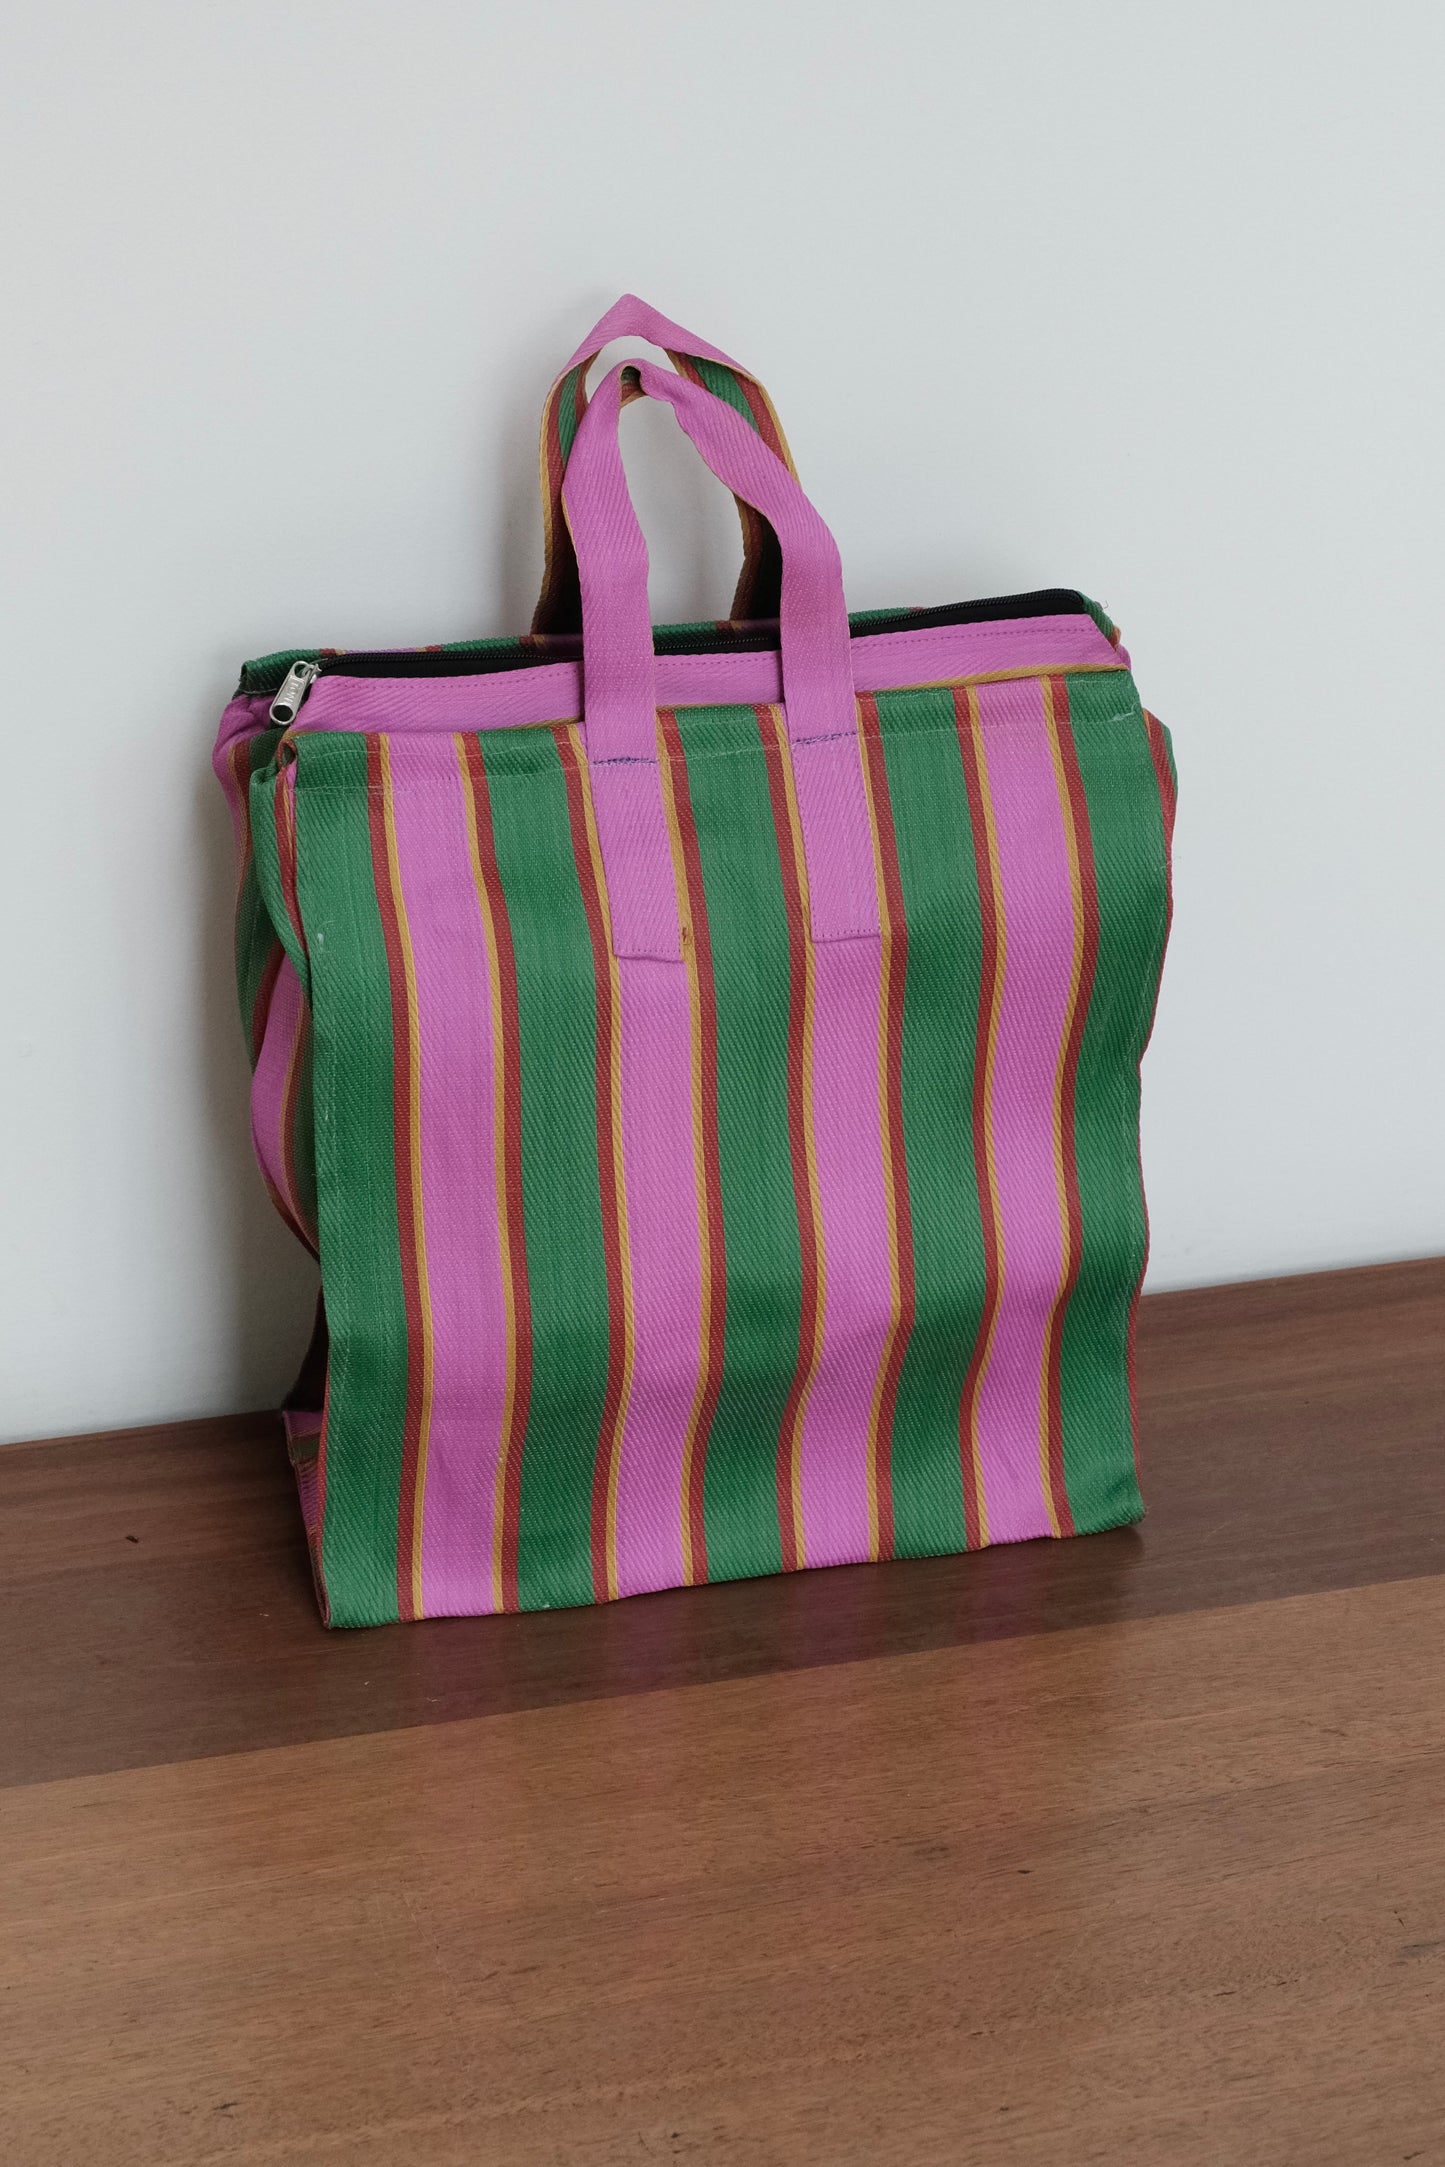 Stripe Bag - Small Size